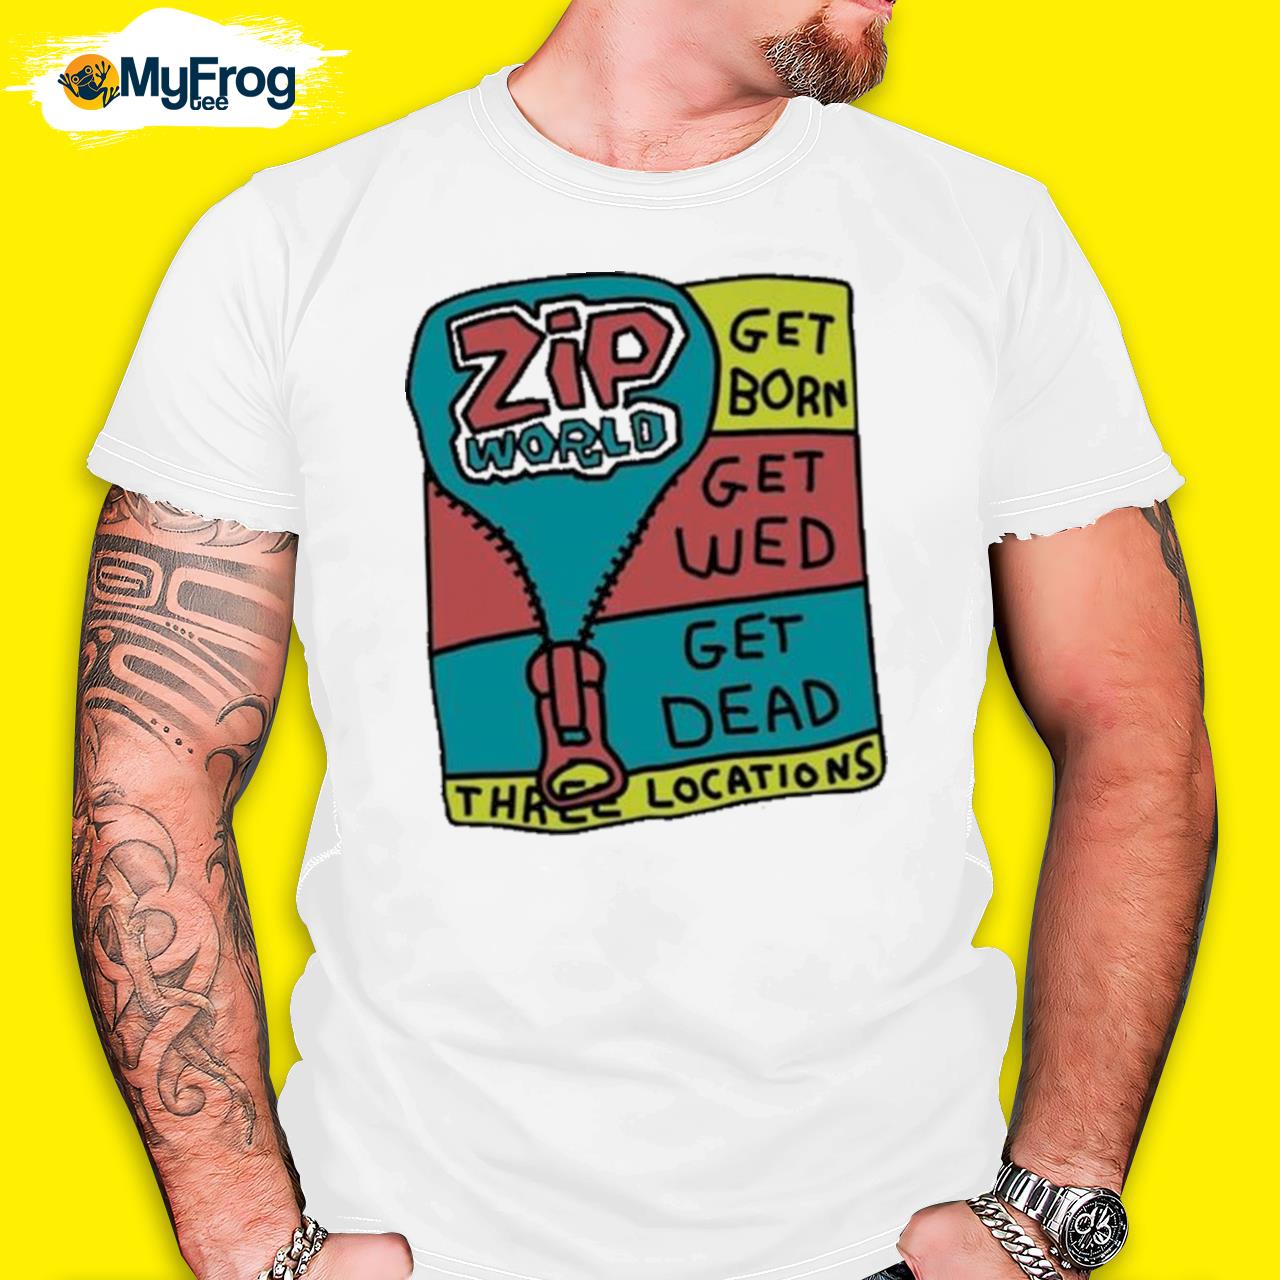 Zoe Bread Merch Zip World Get Born Get Wed Get Dead Three Locations Shirt